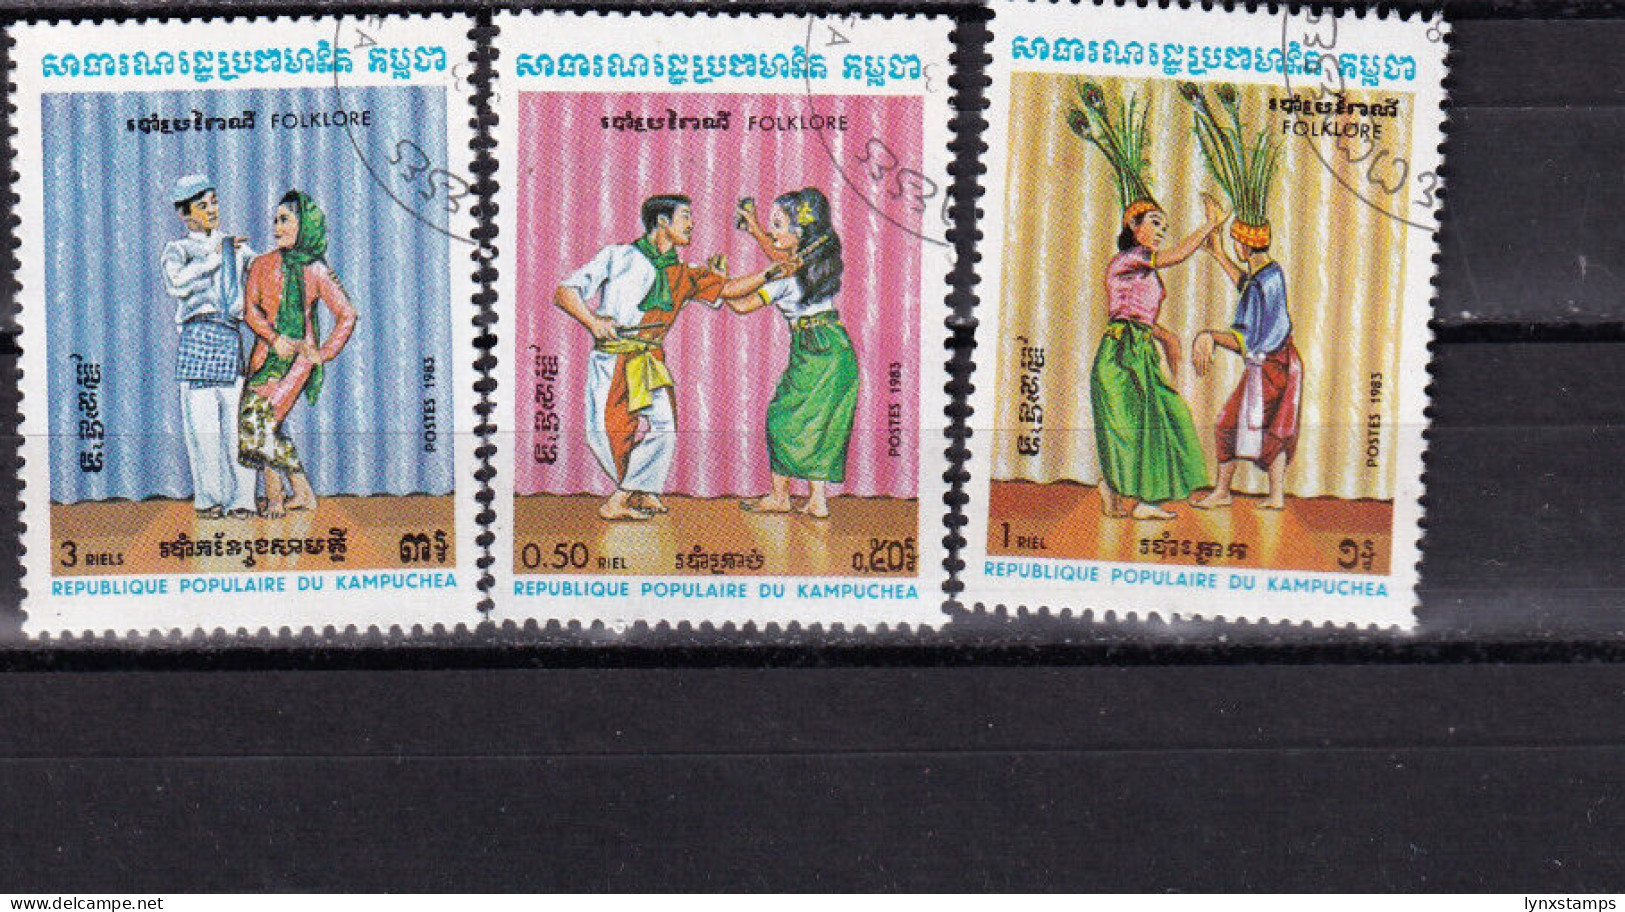 LI03 Cape Verde 1983 Folk Customs Used Stamps - Cape Verde